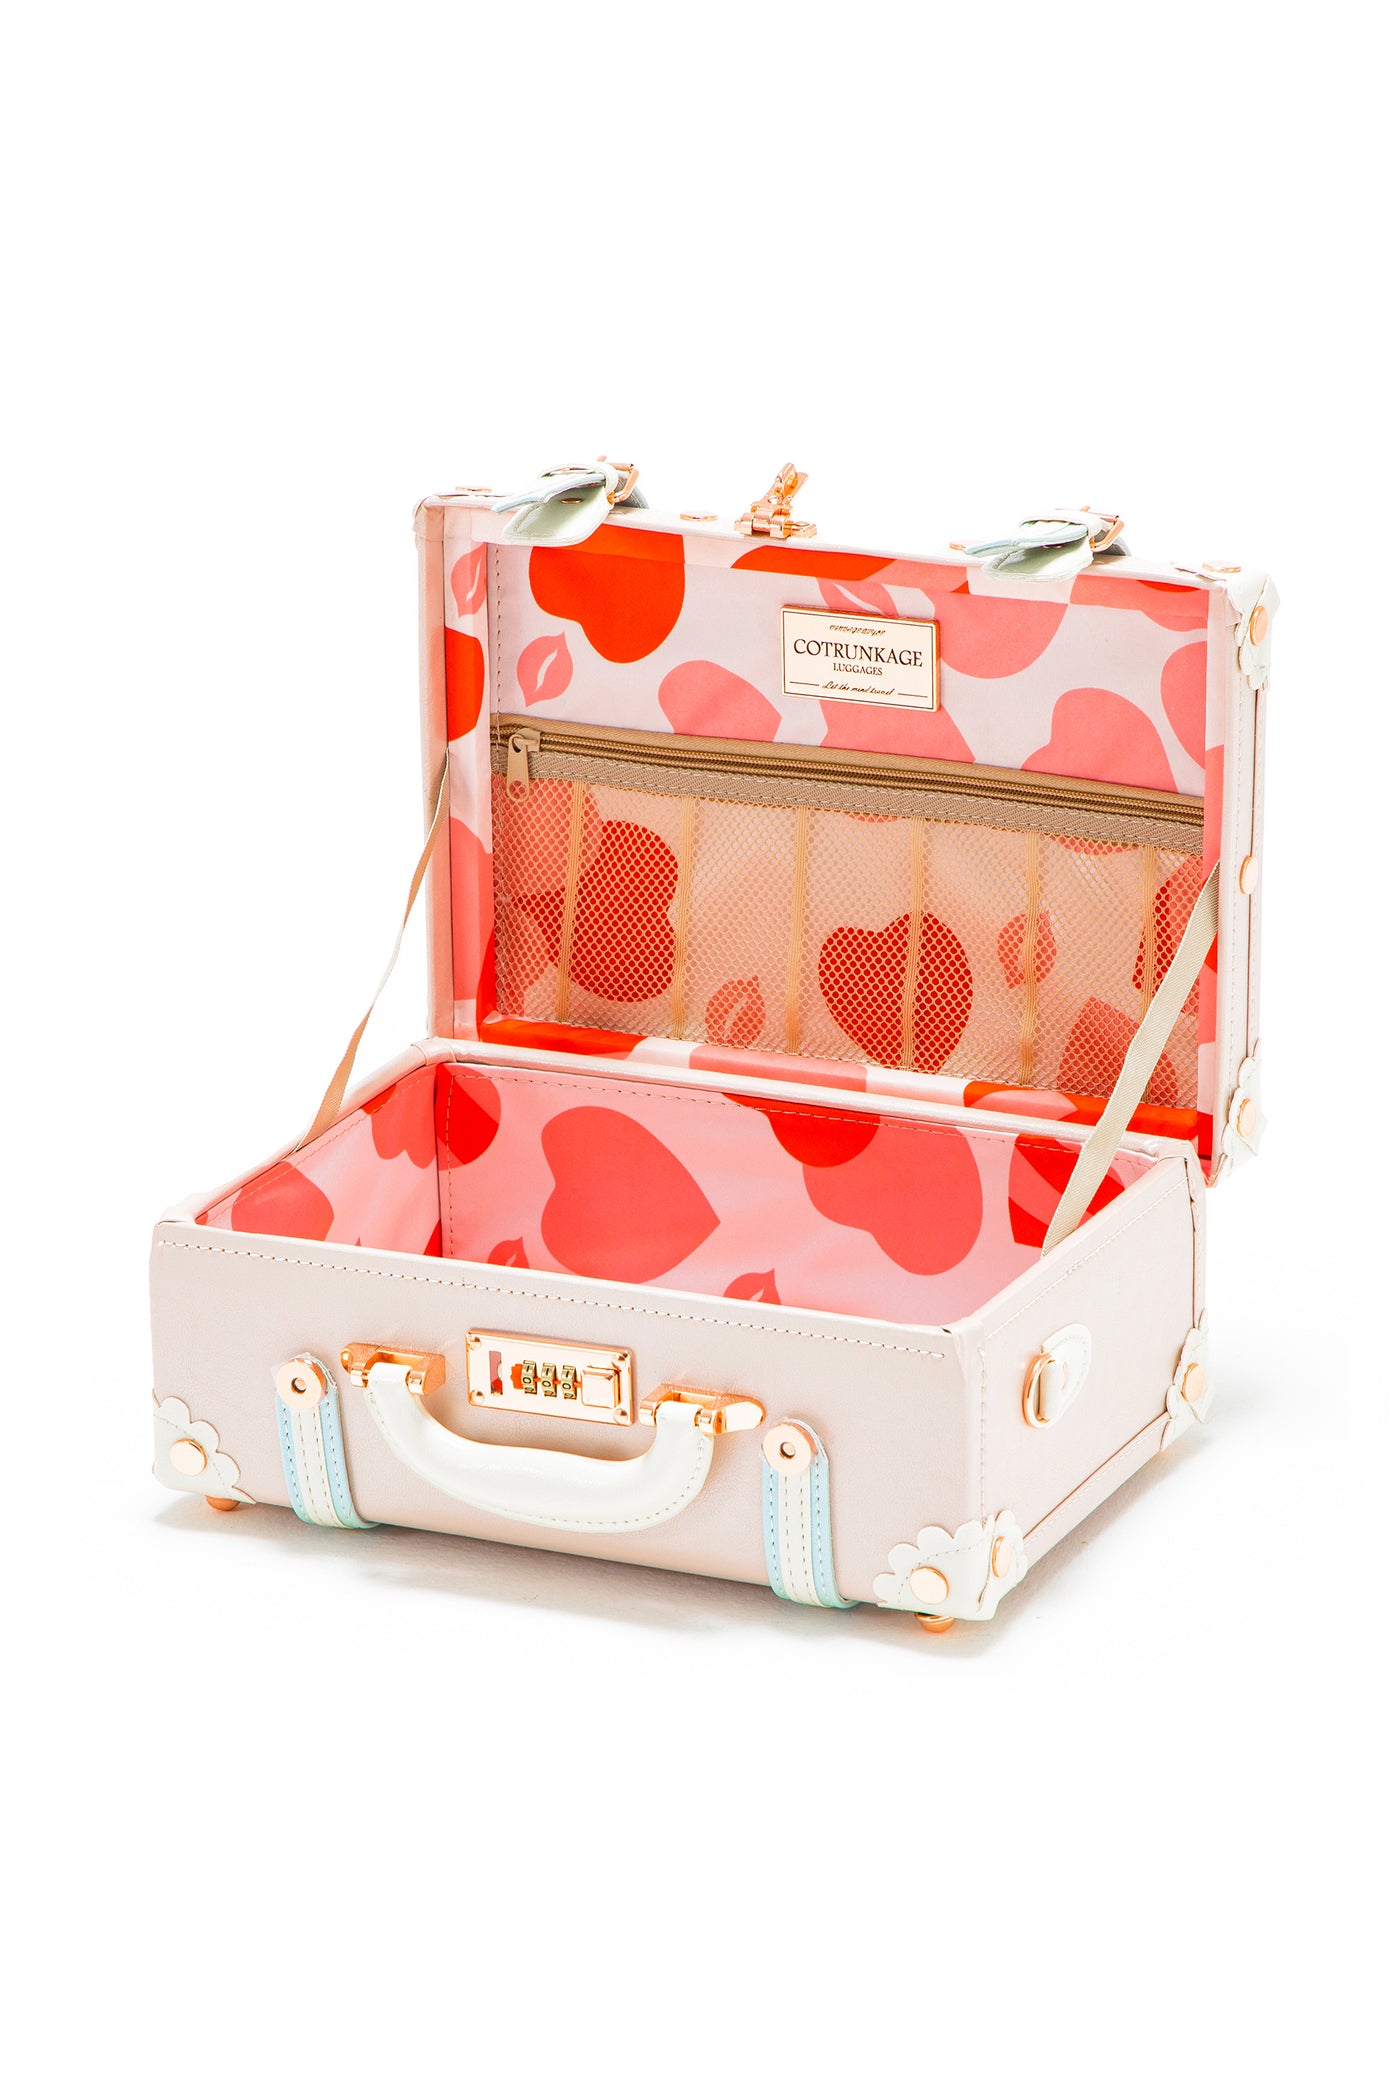 Minimalism 3 Pieces Luggage Set - Cherry Pink's